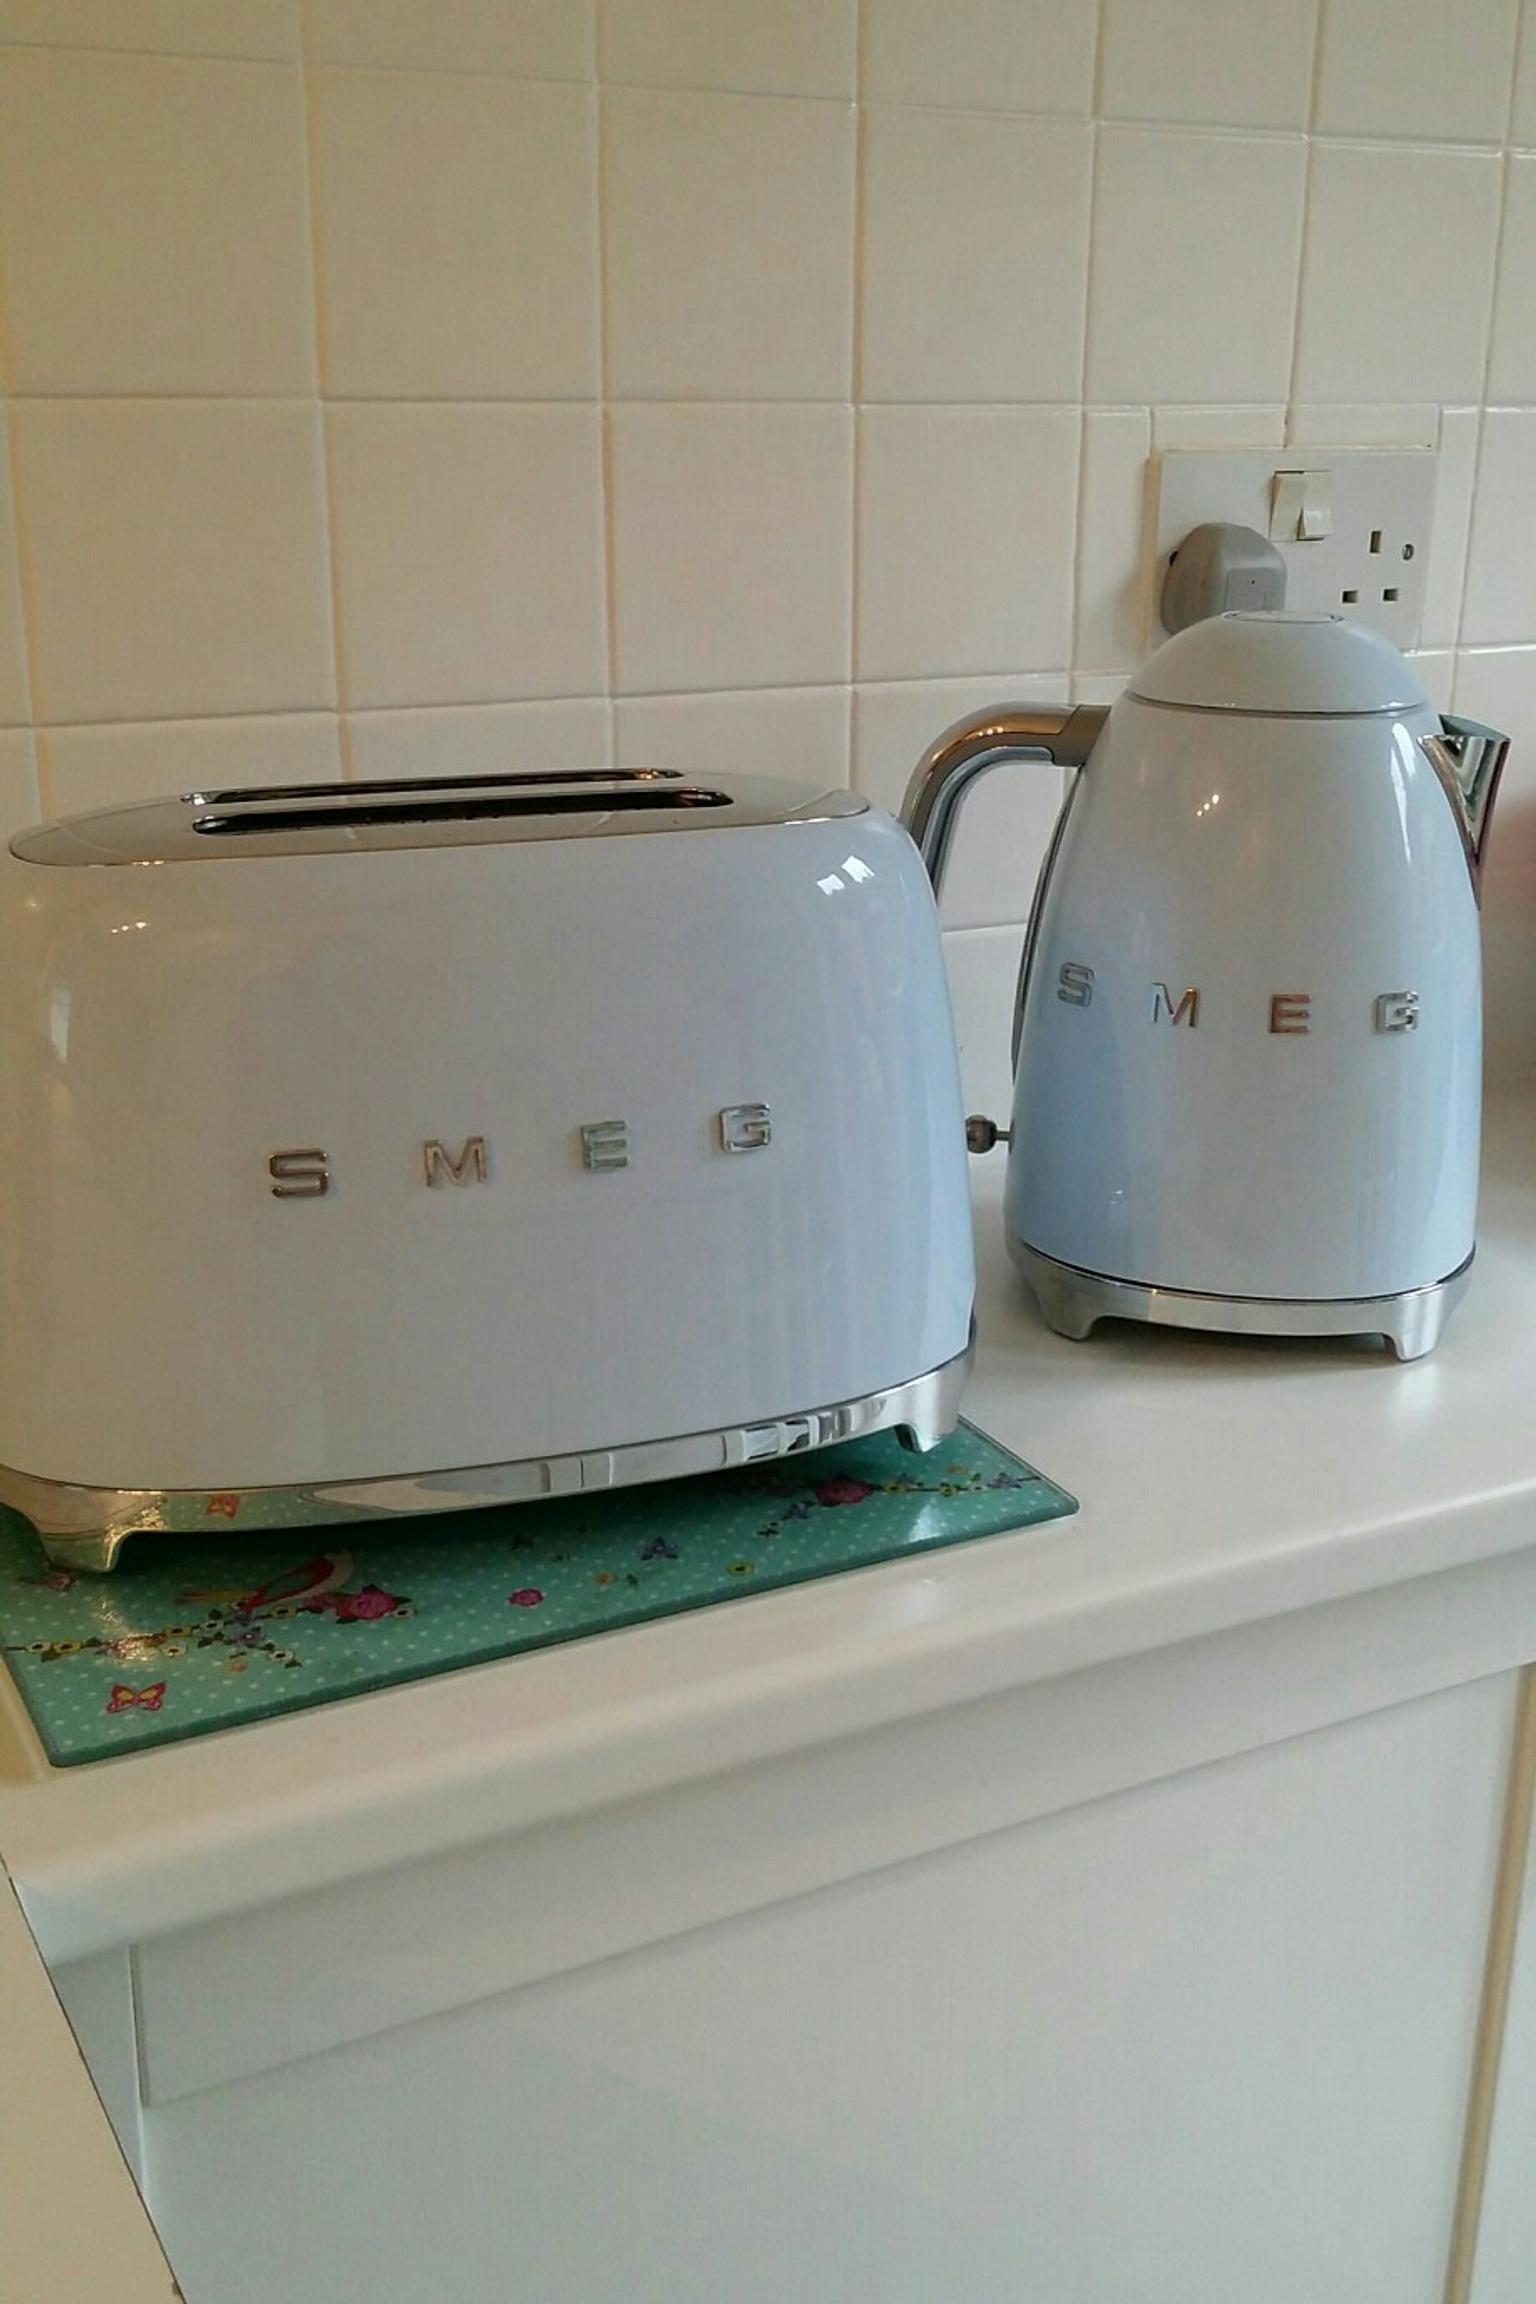 smeg blue kettle